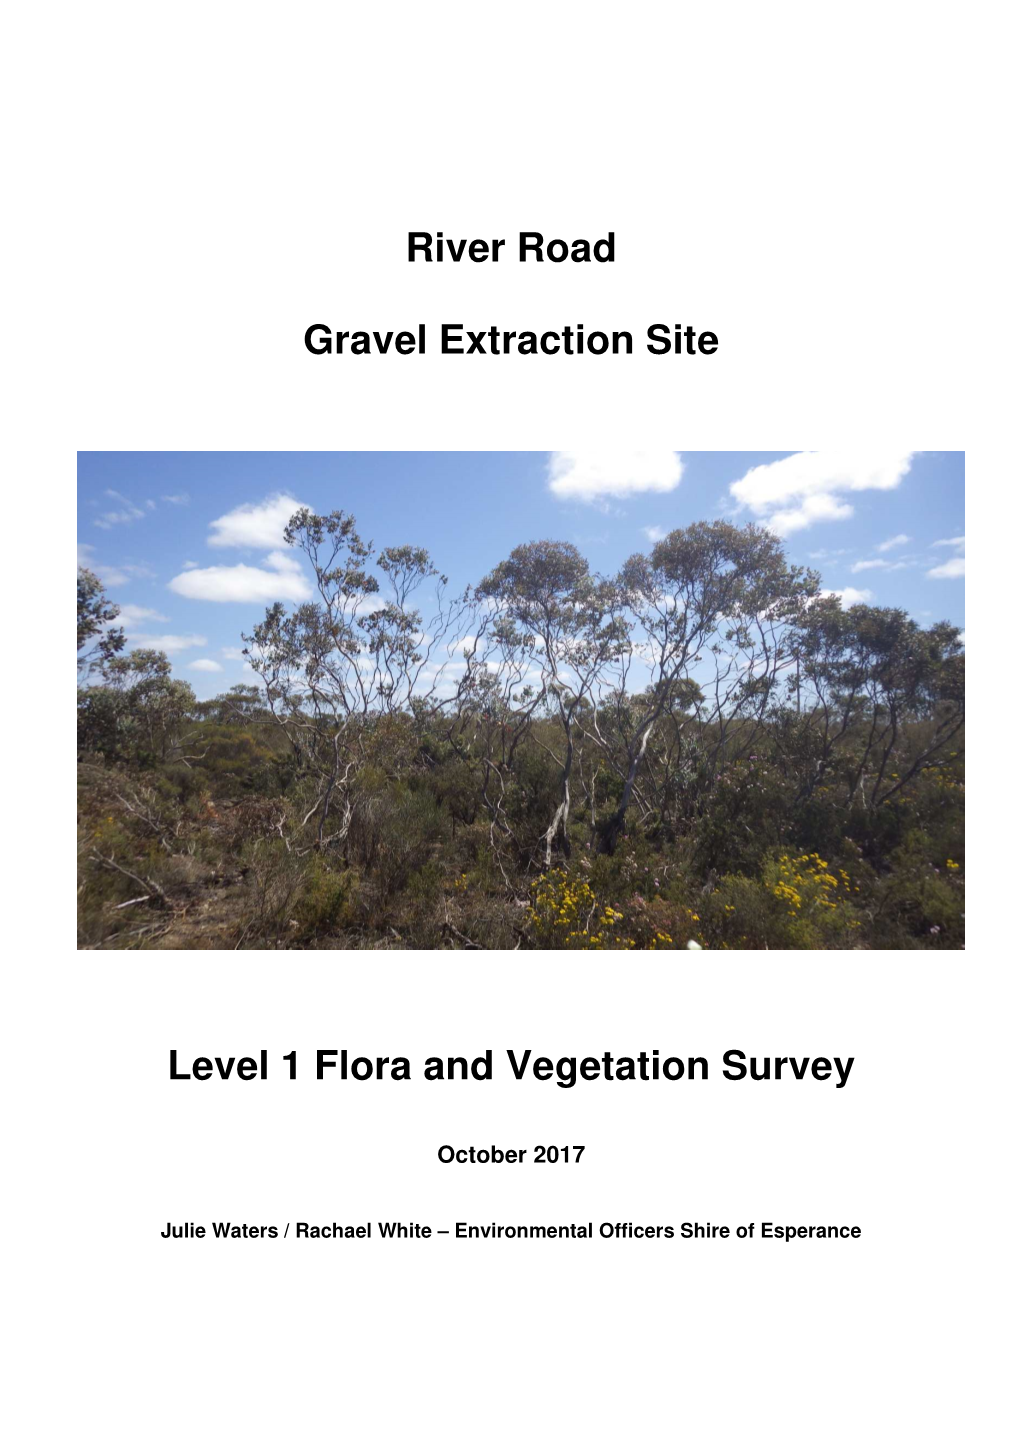 River Road Gravel Extraction Flora Survey